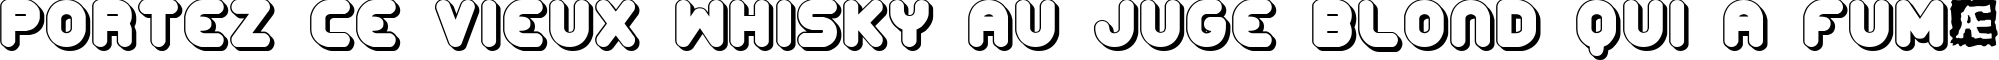 Пример написания шрифтом Corpulent Caps Shadow BRK текста на французском